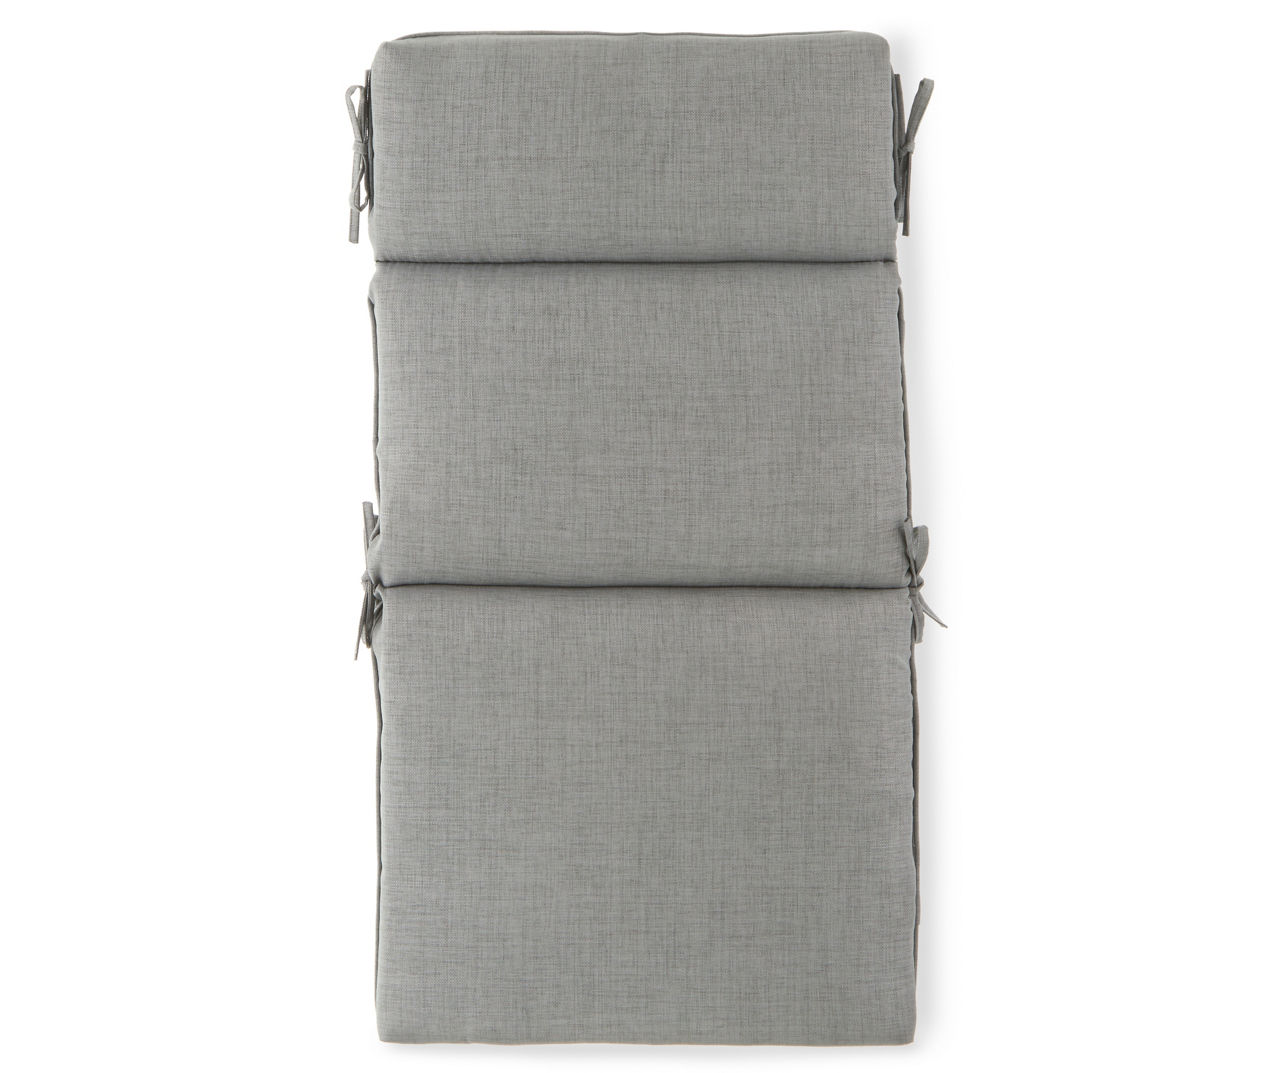 Rave Graphite Gray Premium Outdoor Chair Cushion